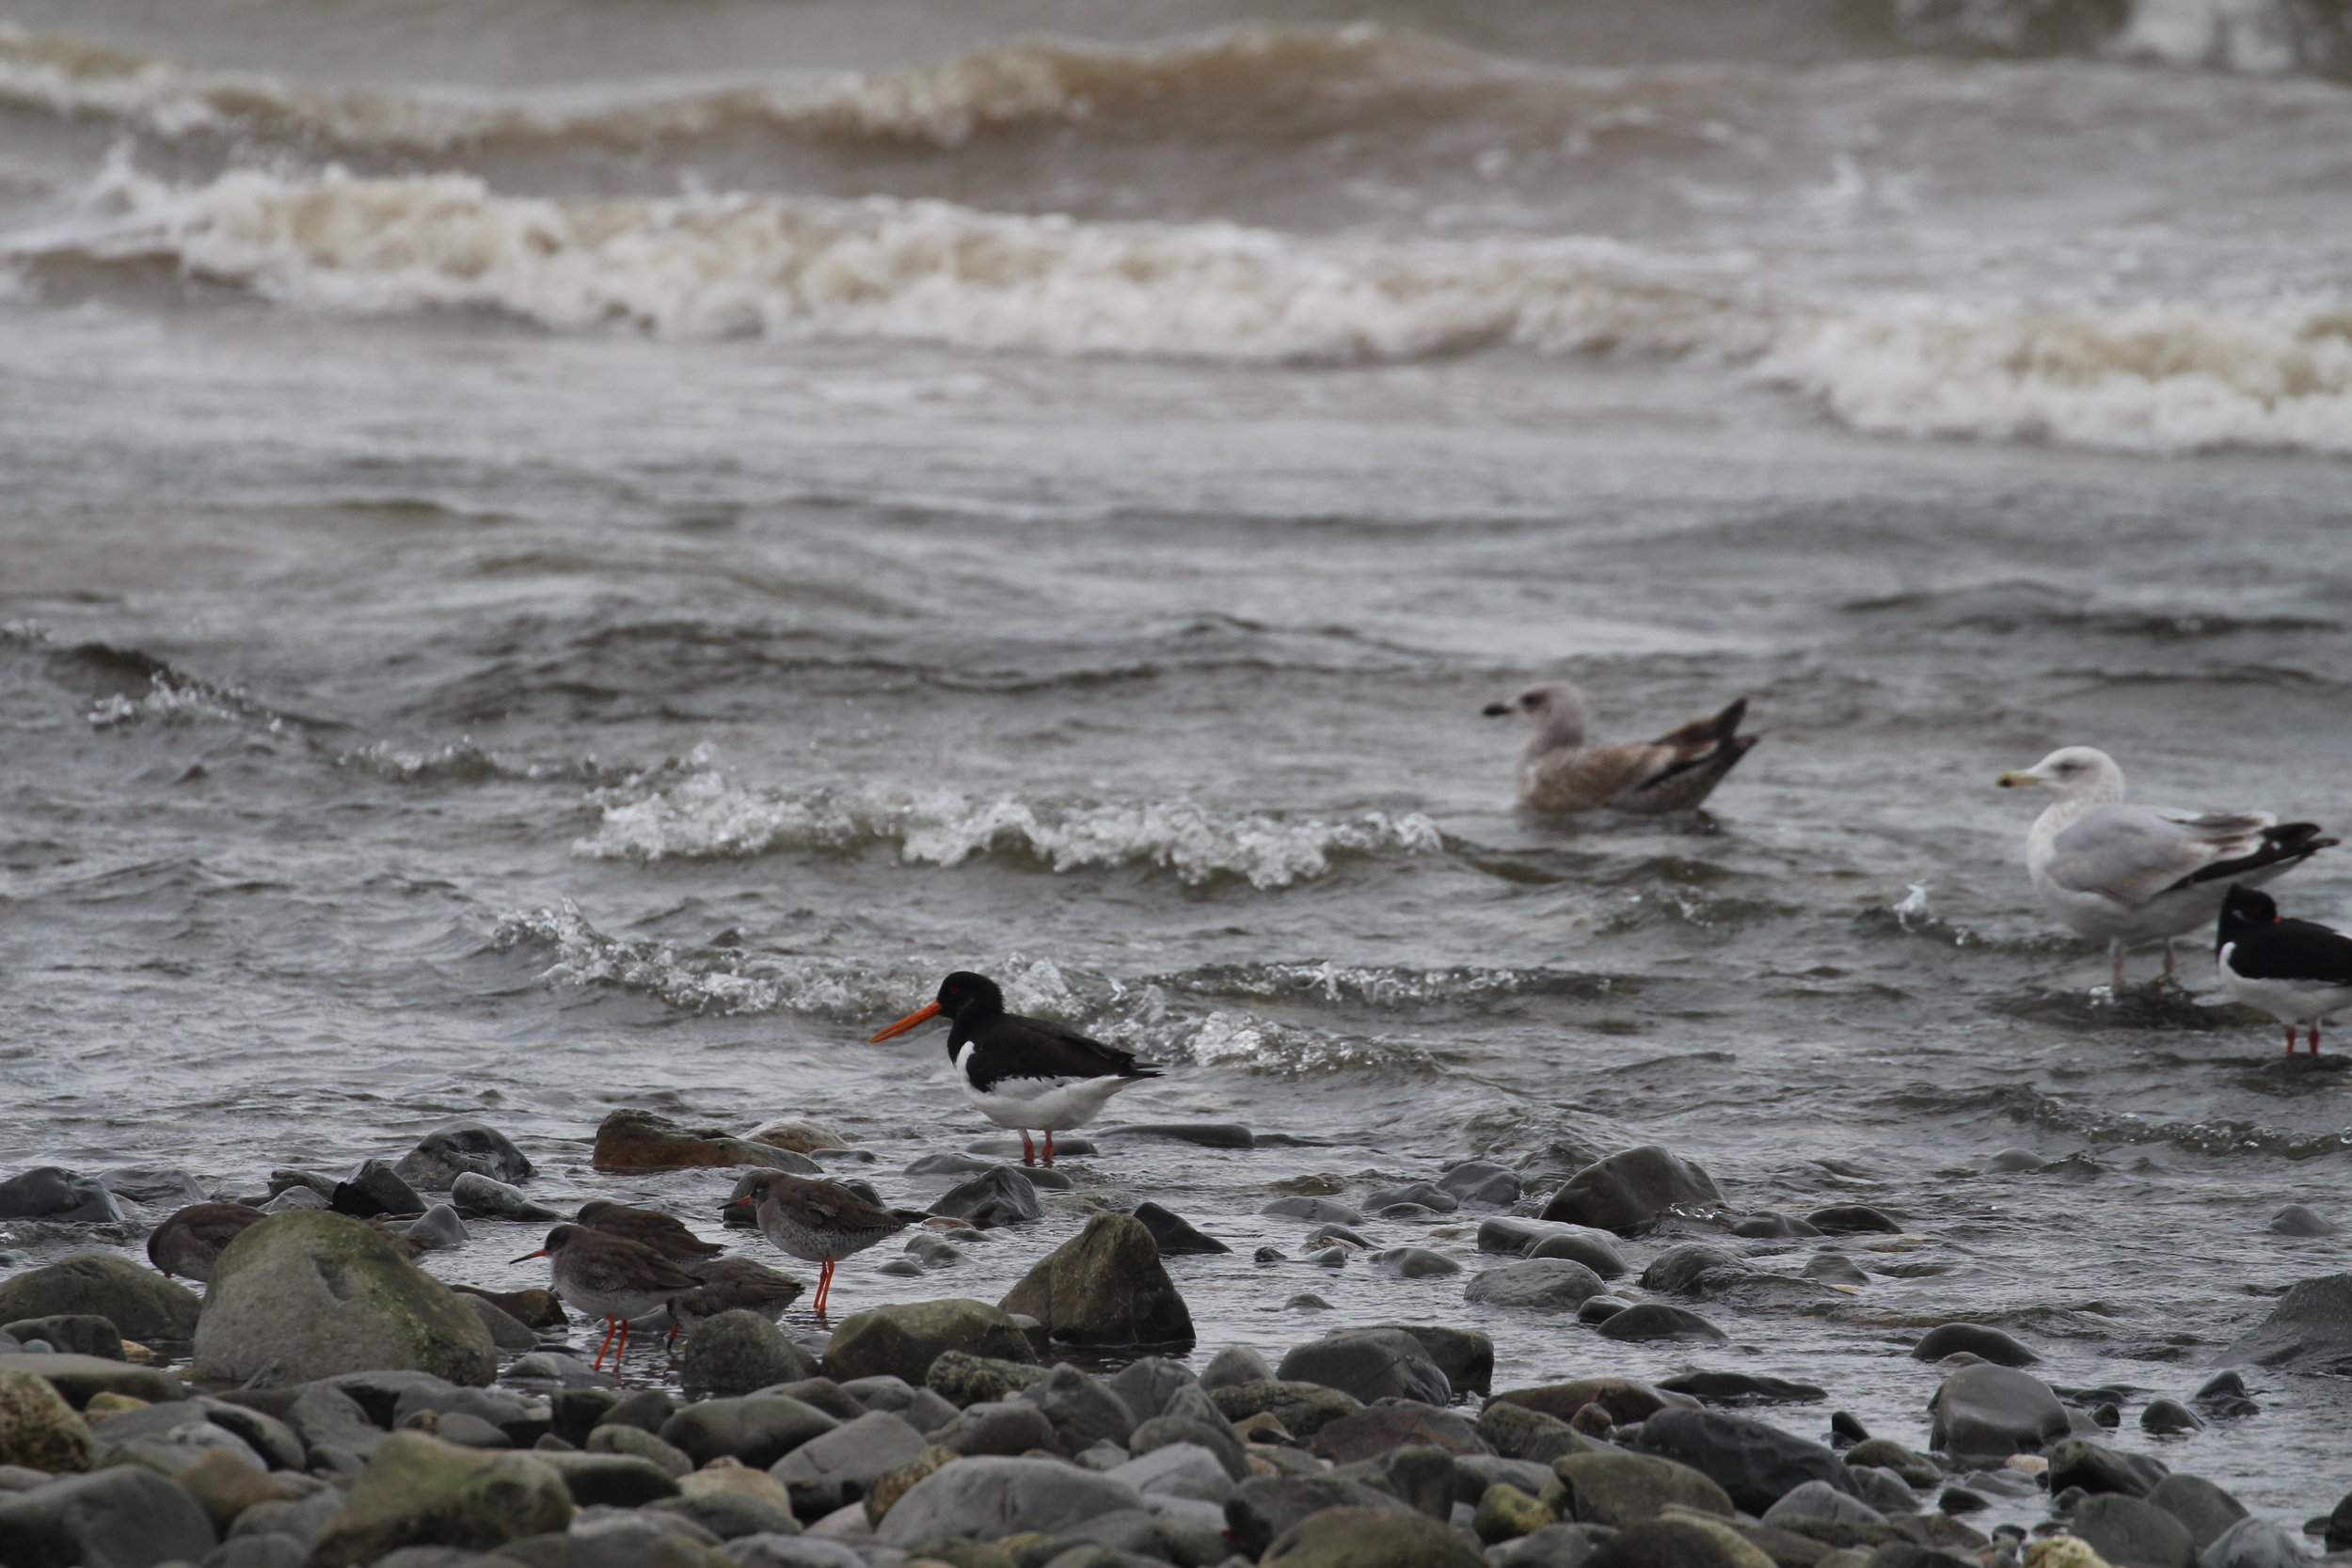 Redshank, Oystercatcher and Herring Gulls